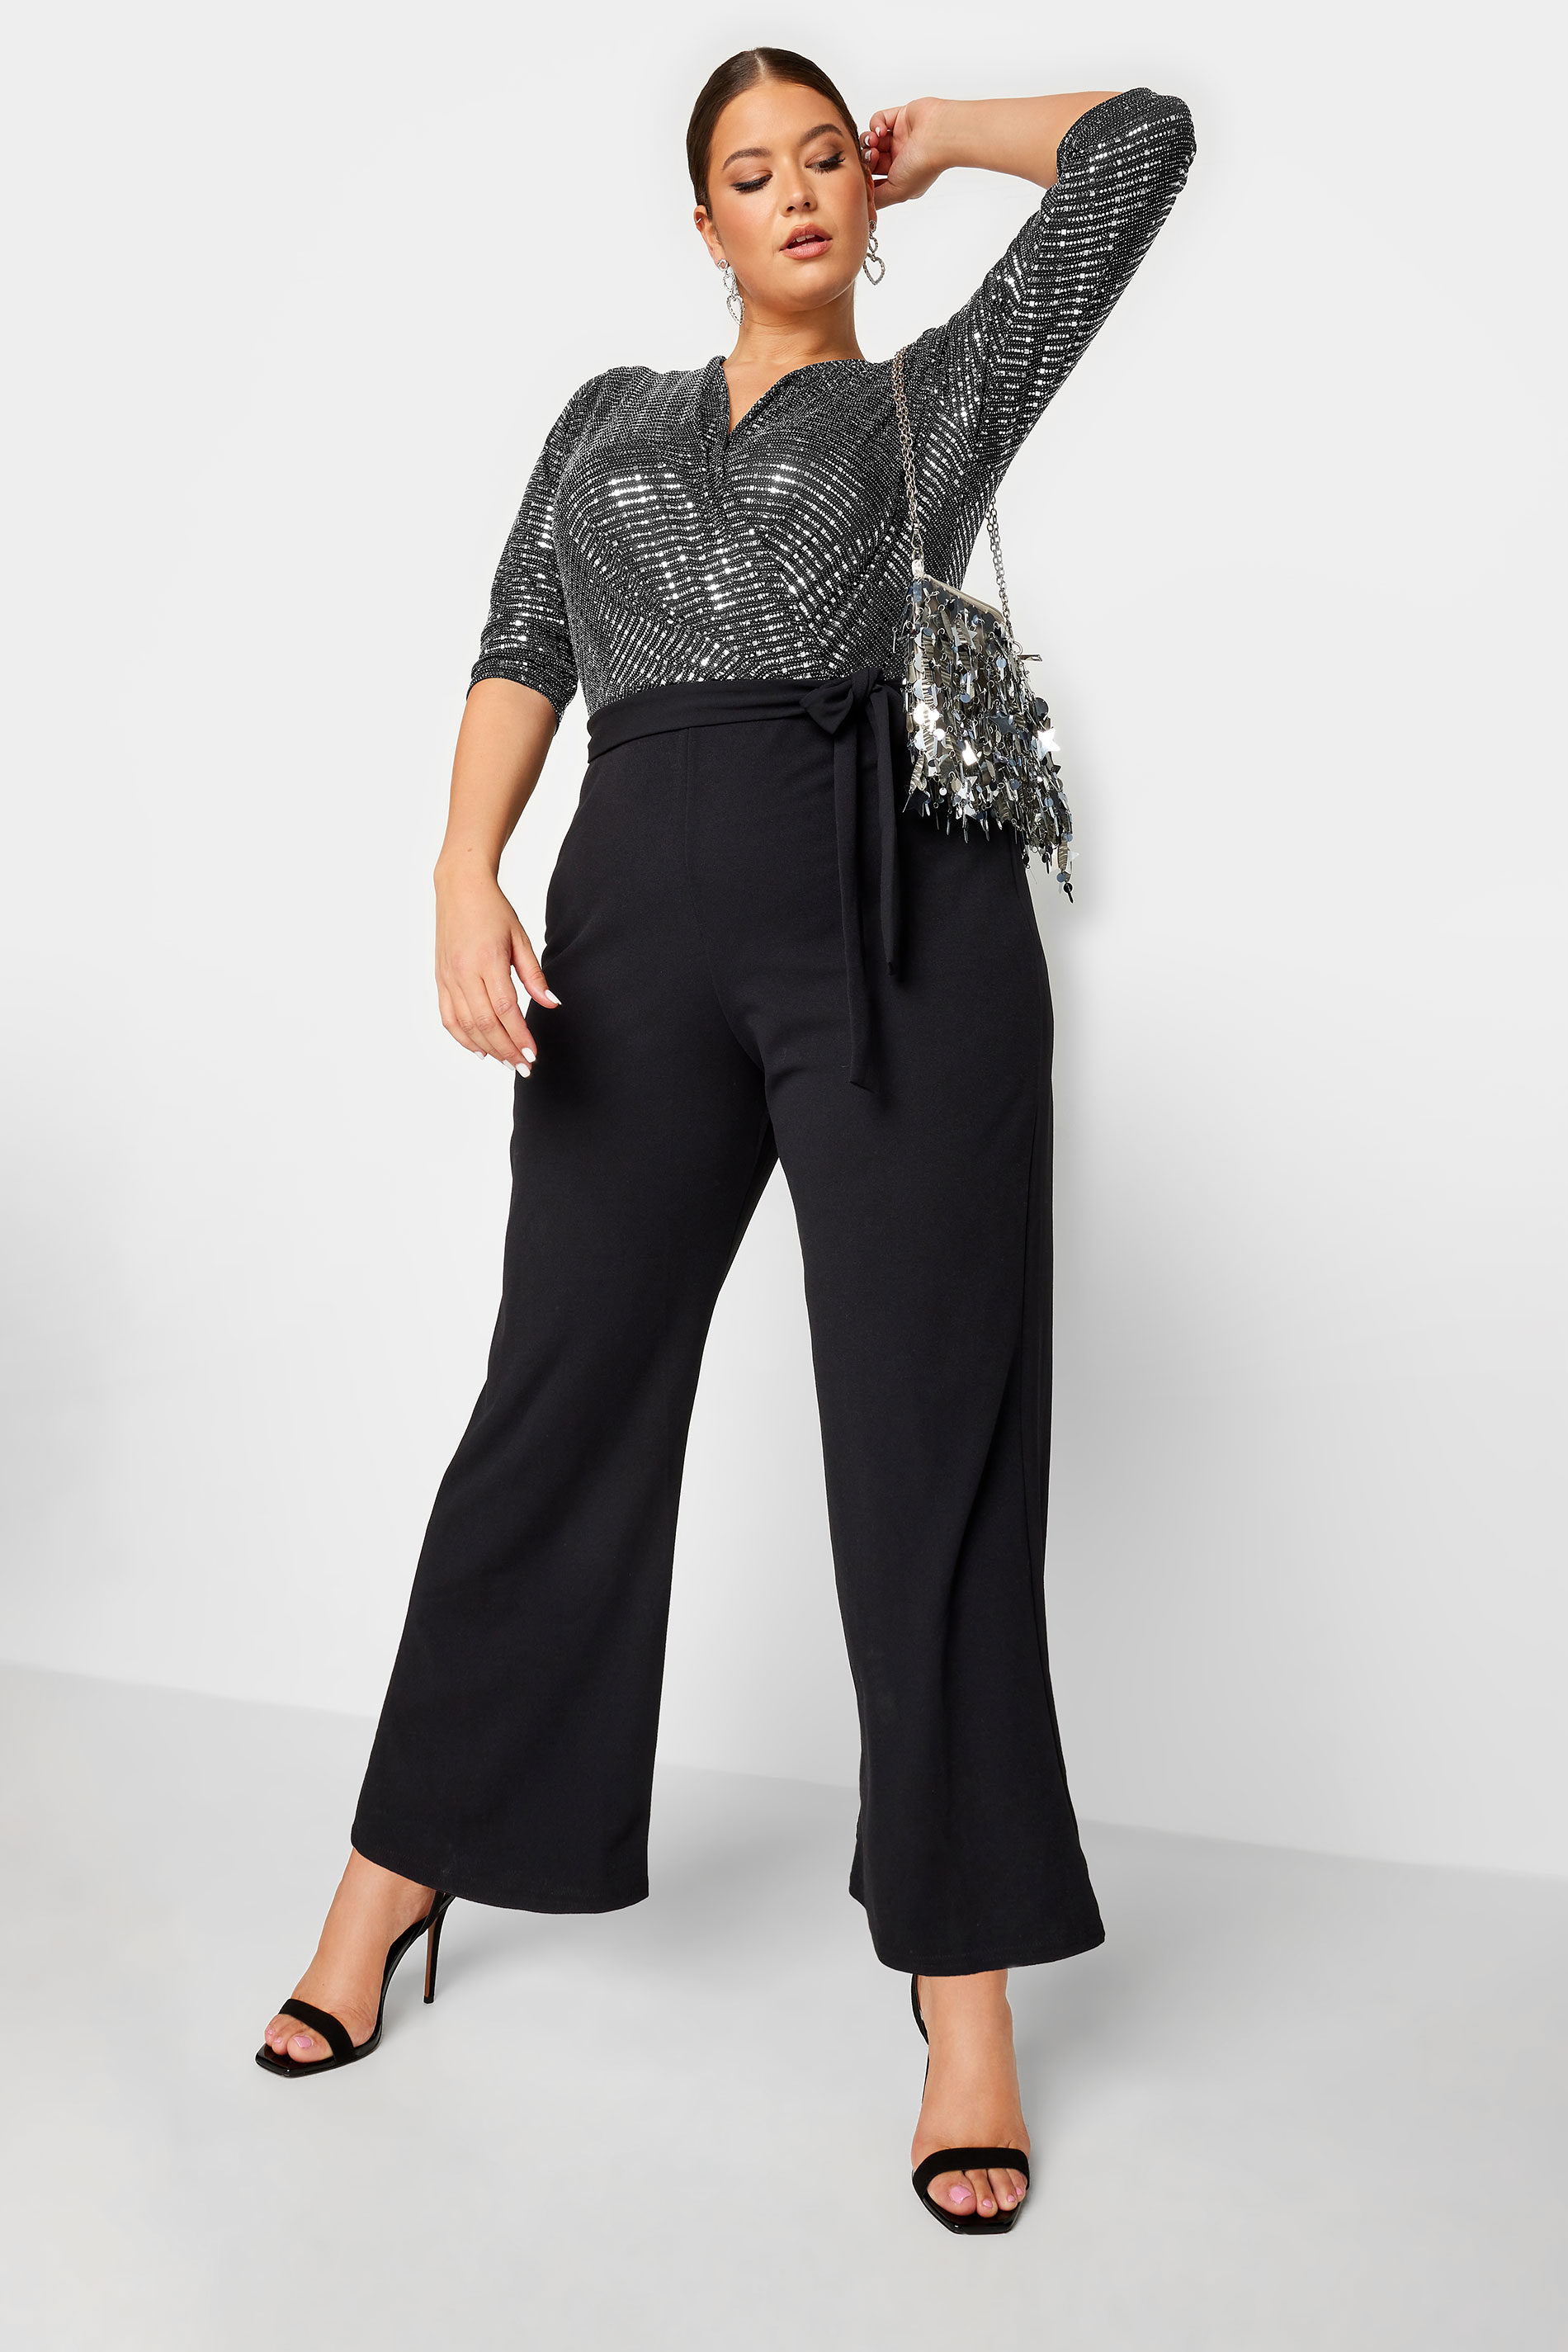 YOURS LONDON Plus Size Black & Silver Sequin Wrap Jumpsuit | Yours Clothing 2